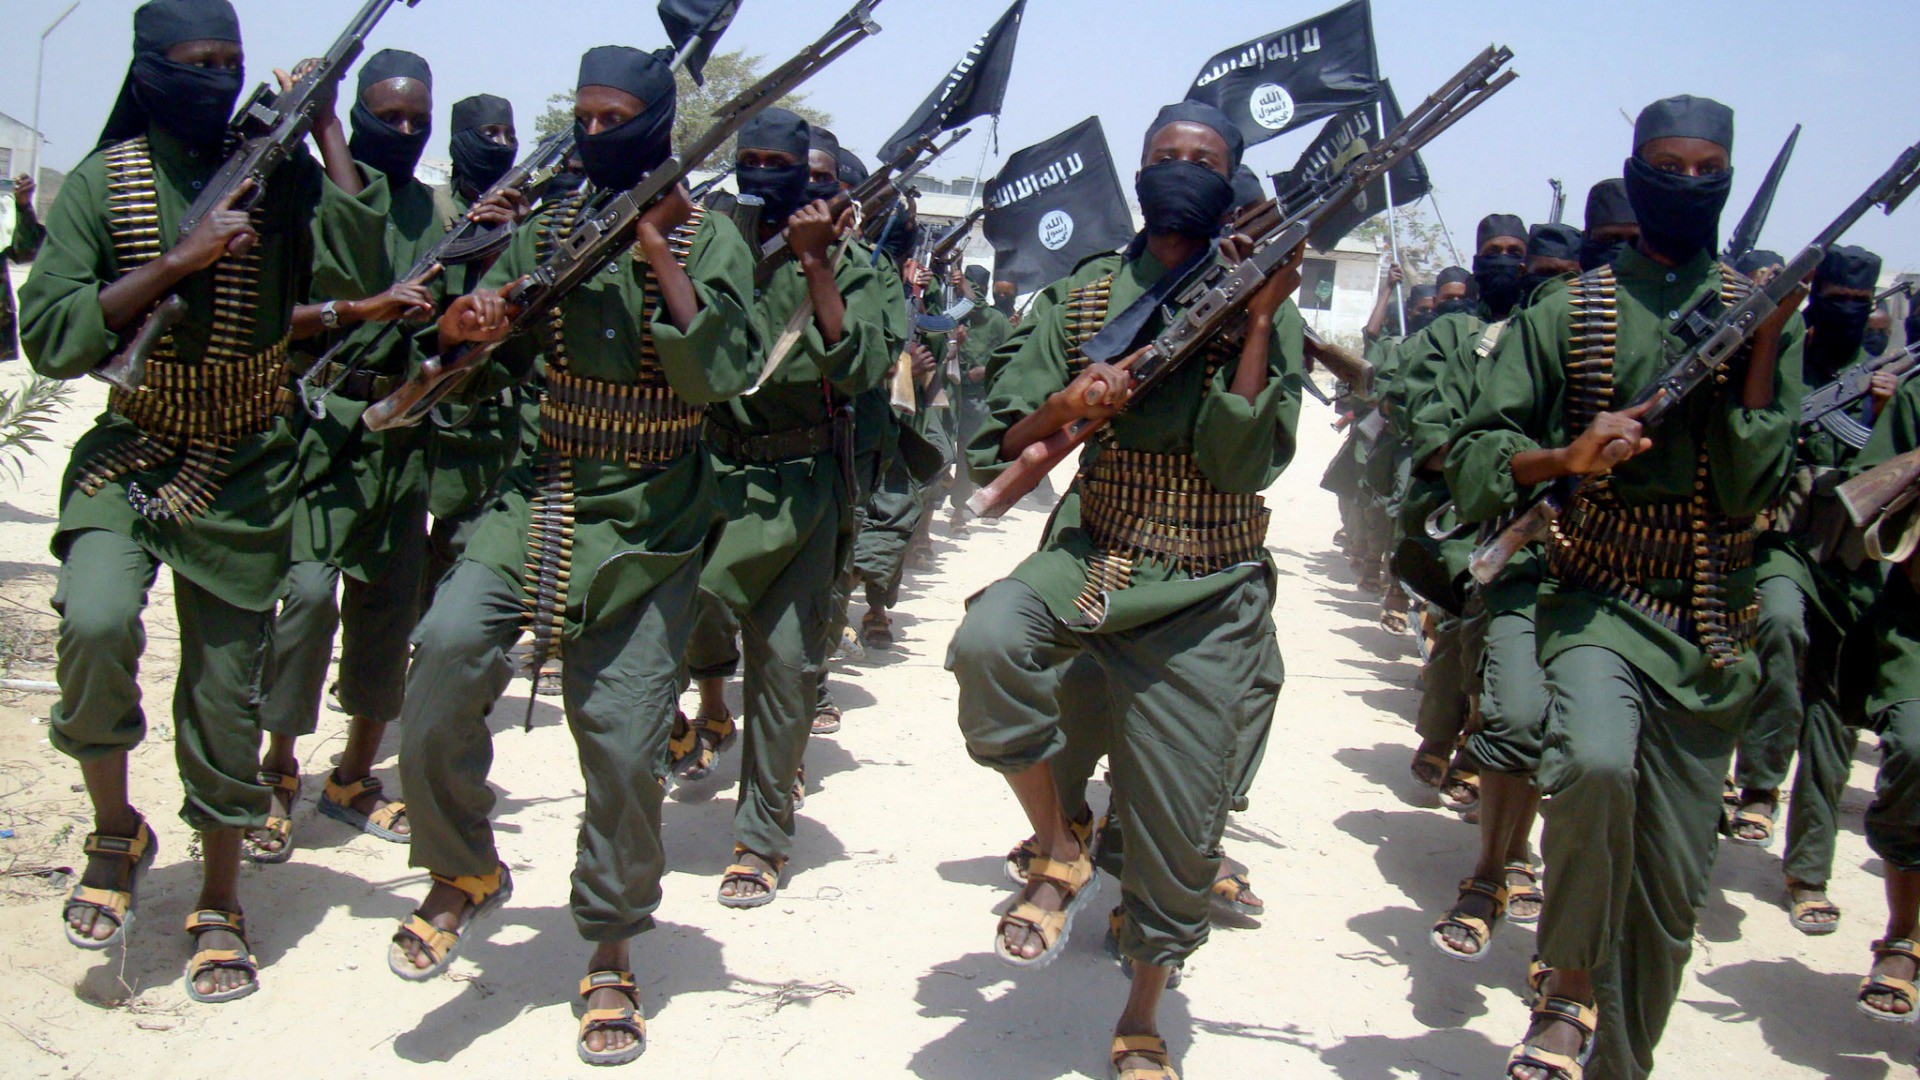 Somalie Terroristes d'al-Shebab (Photo www.aljazeera.com)